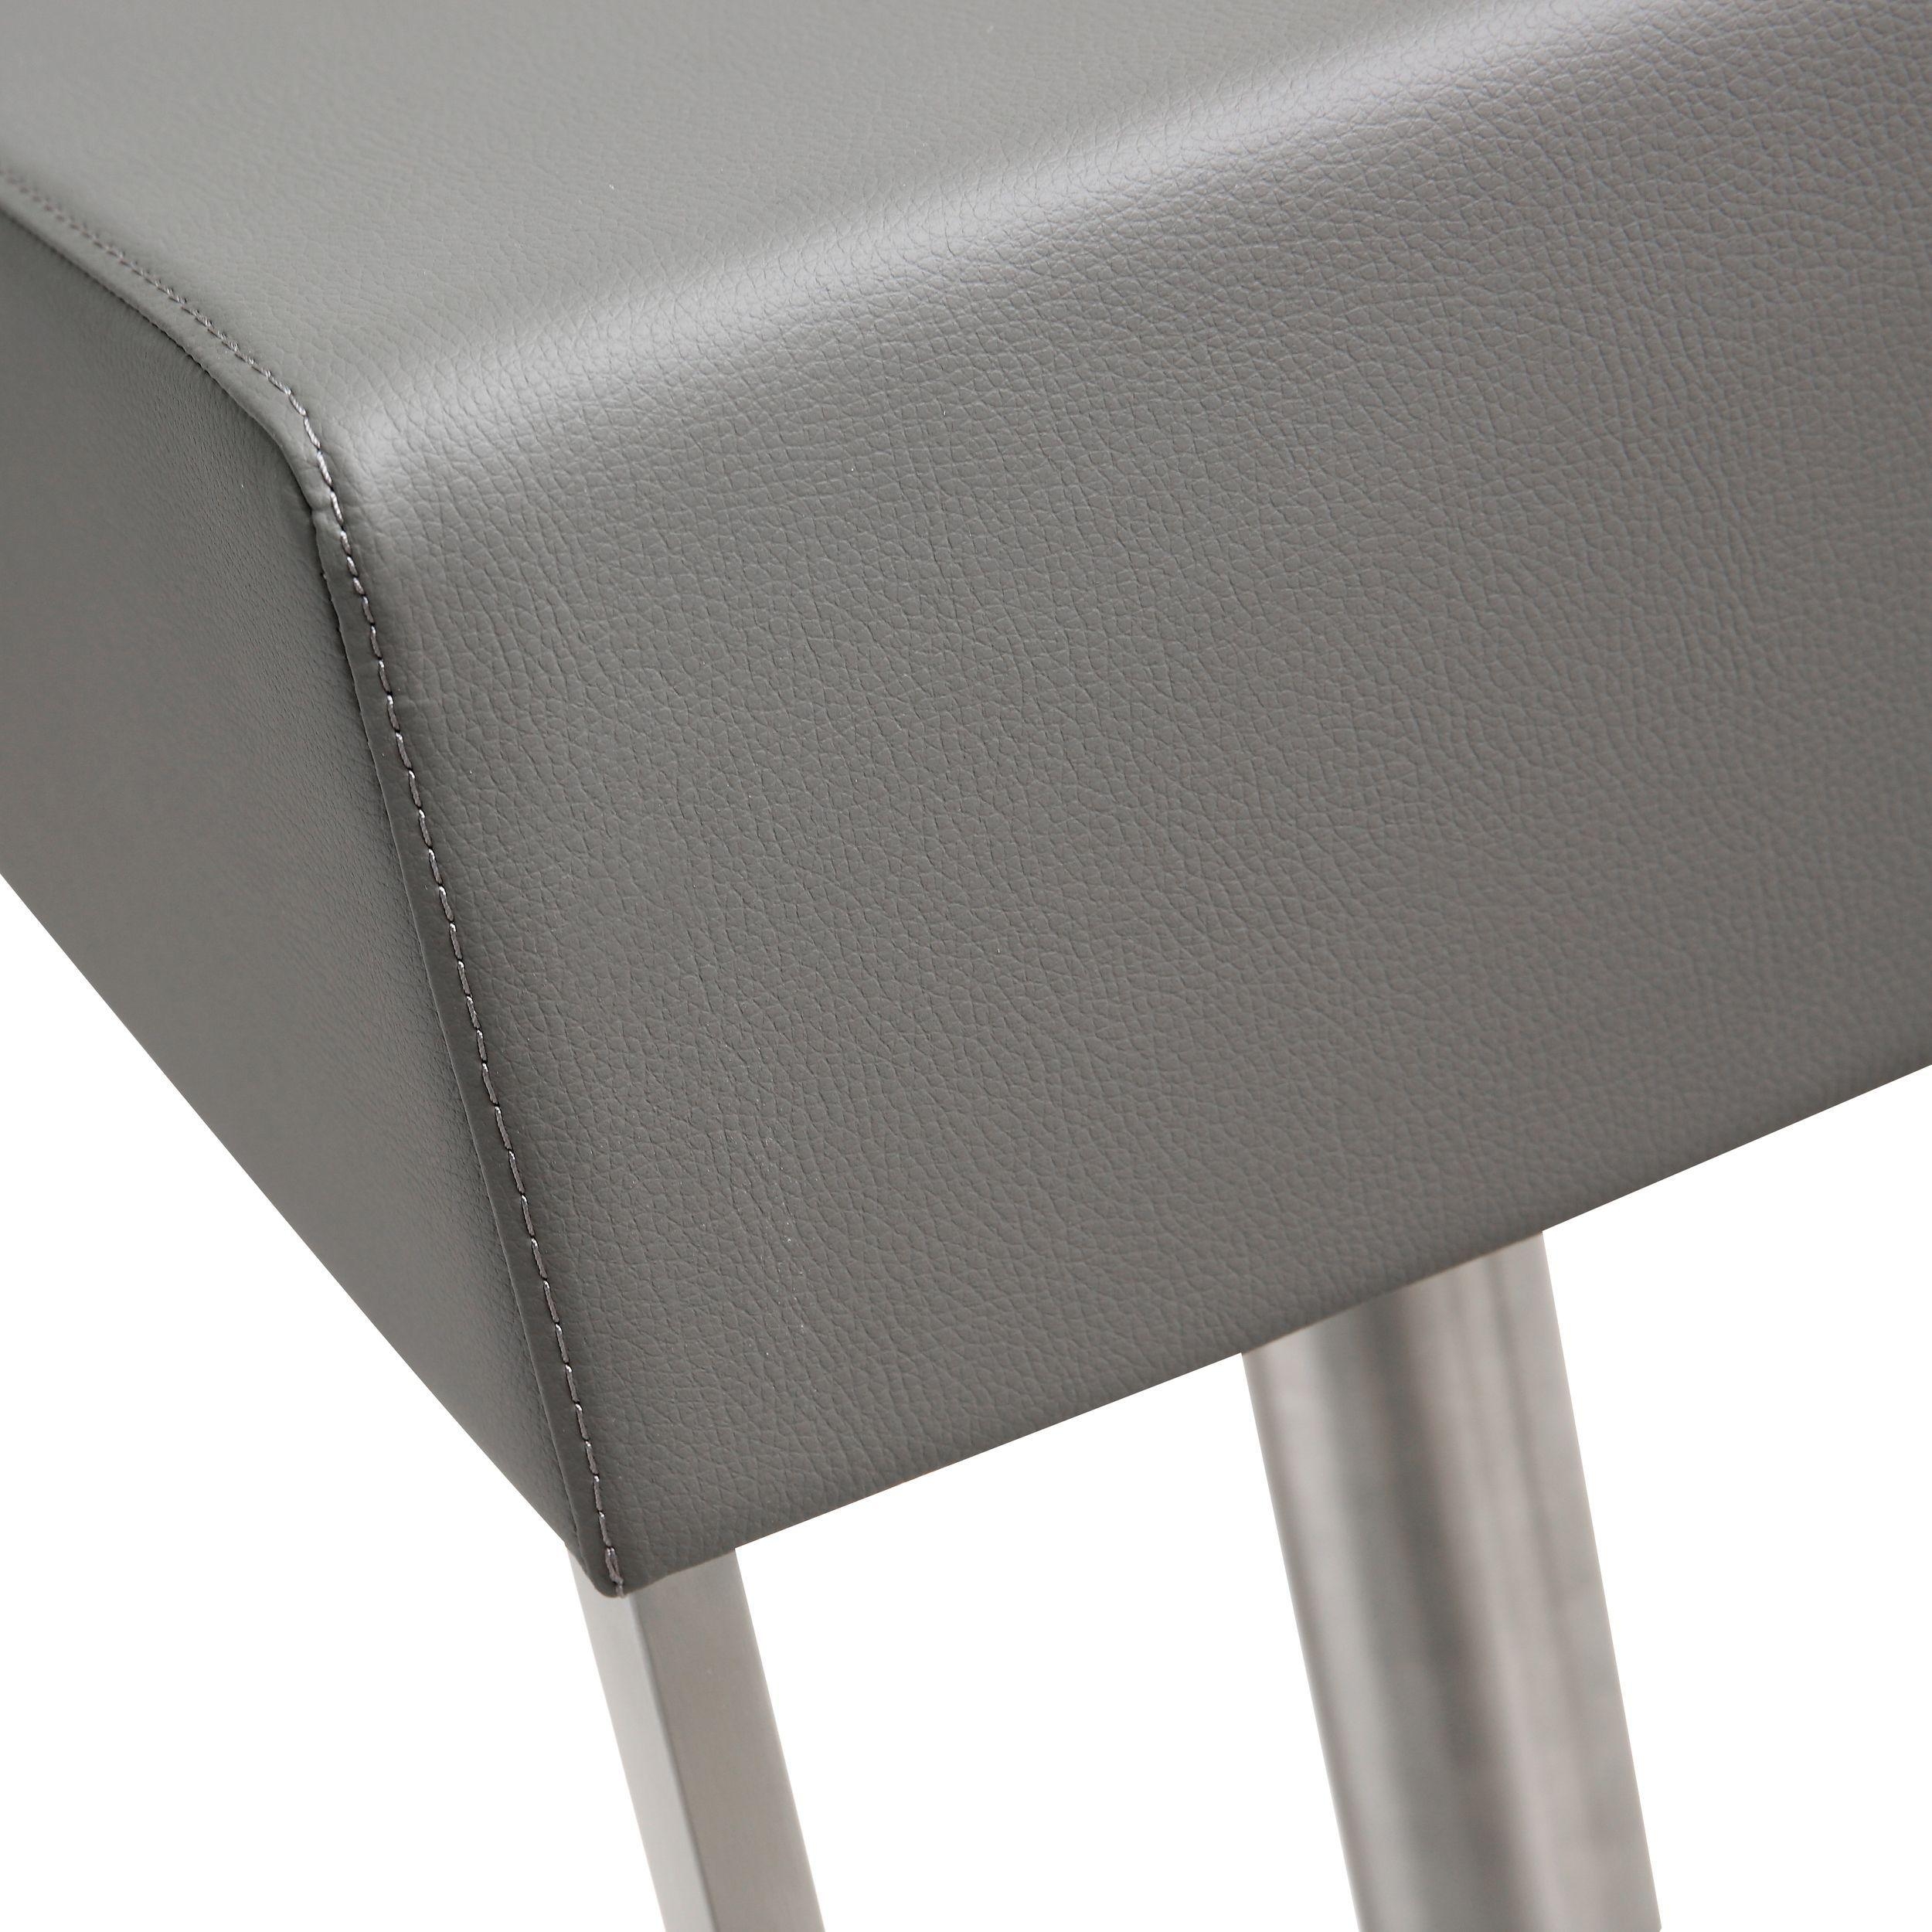 Seville Grey Stainless Adjustable Barstool - Image 6